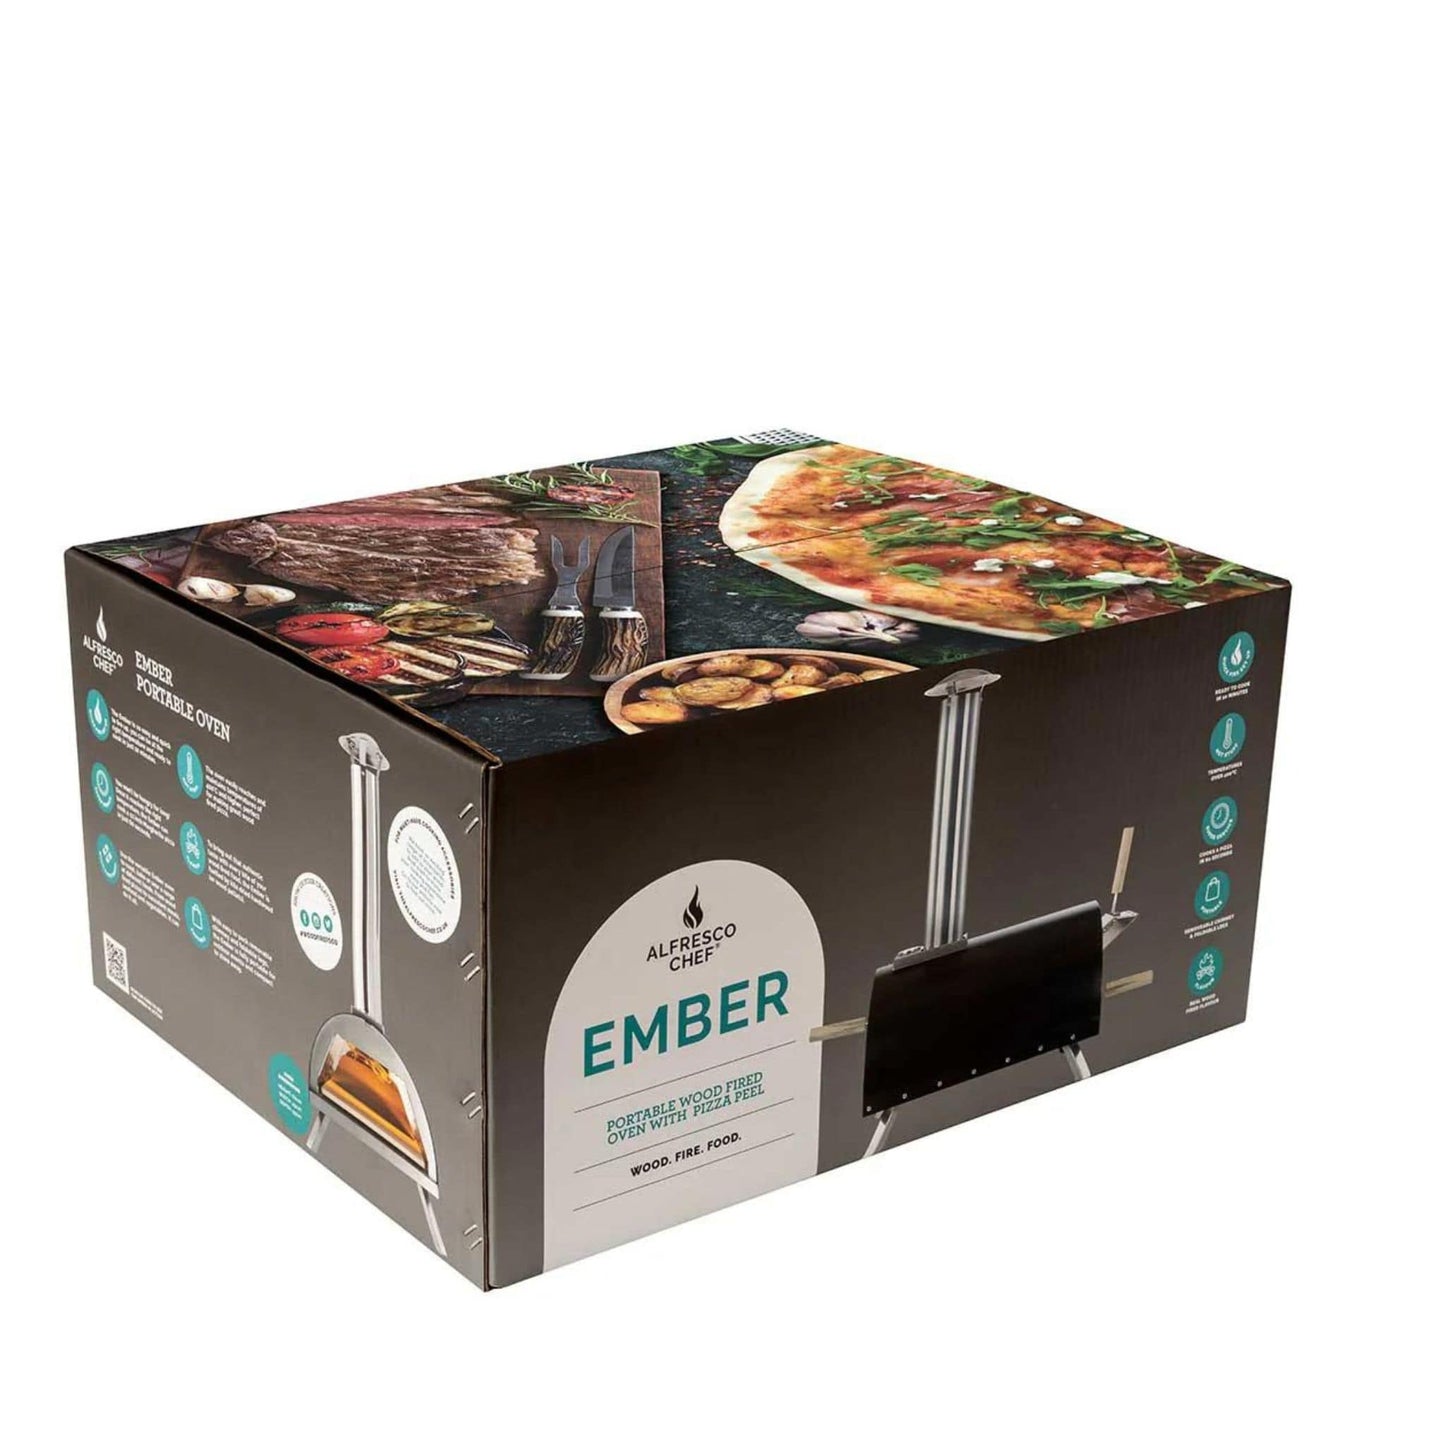 Alfresco Ember Oven with Peel